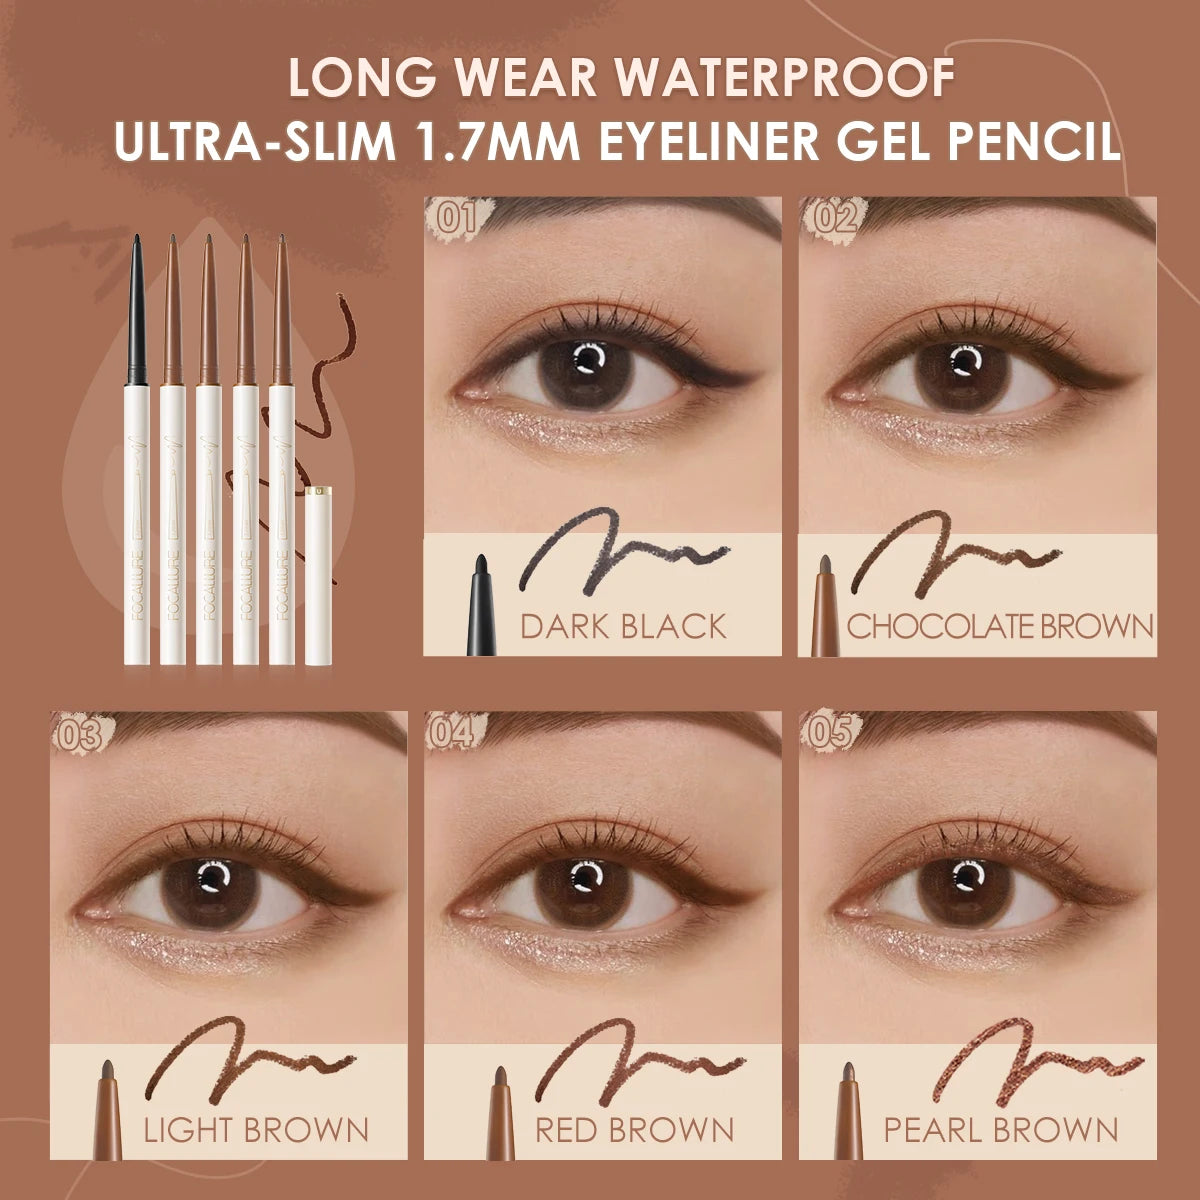 FOCALLURE Waterproof Ultra-slim Eyeliner Gel Pencil Soft High Pigment Professional Long-lasting Eyes Liner Makeup Tool Cosmetics  beautylum.com   